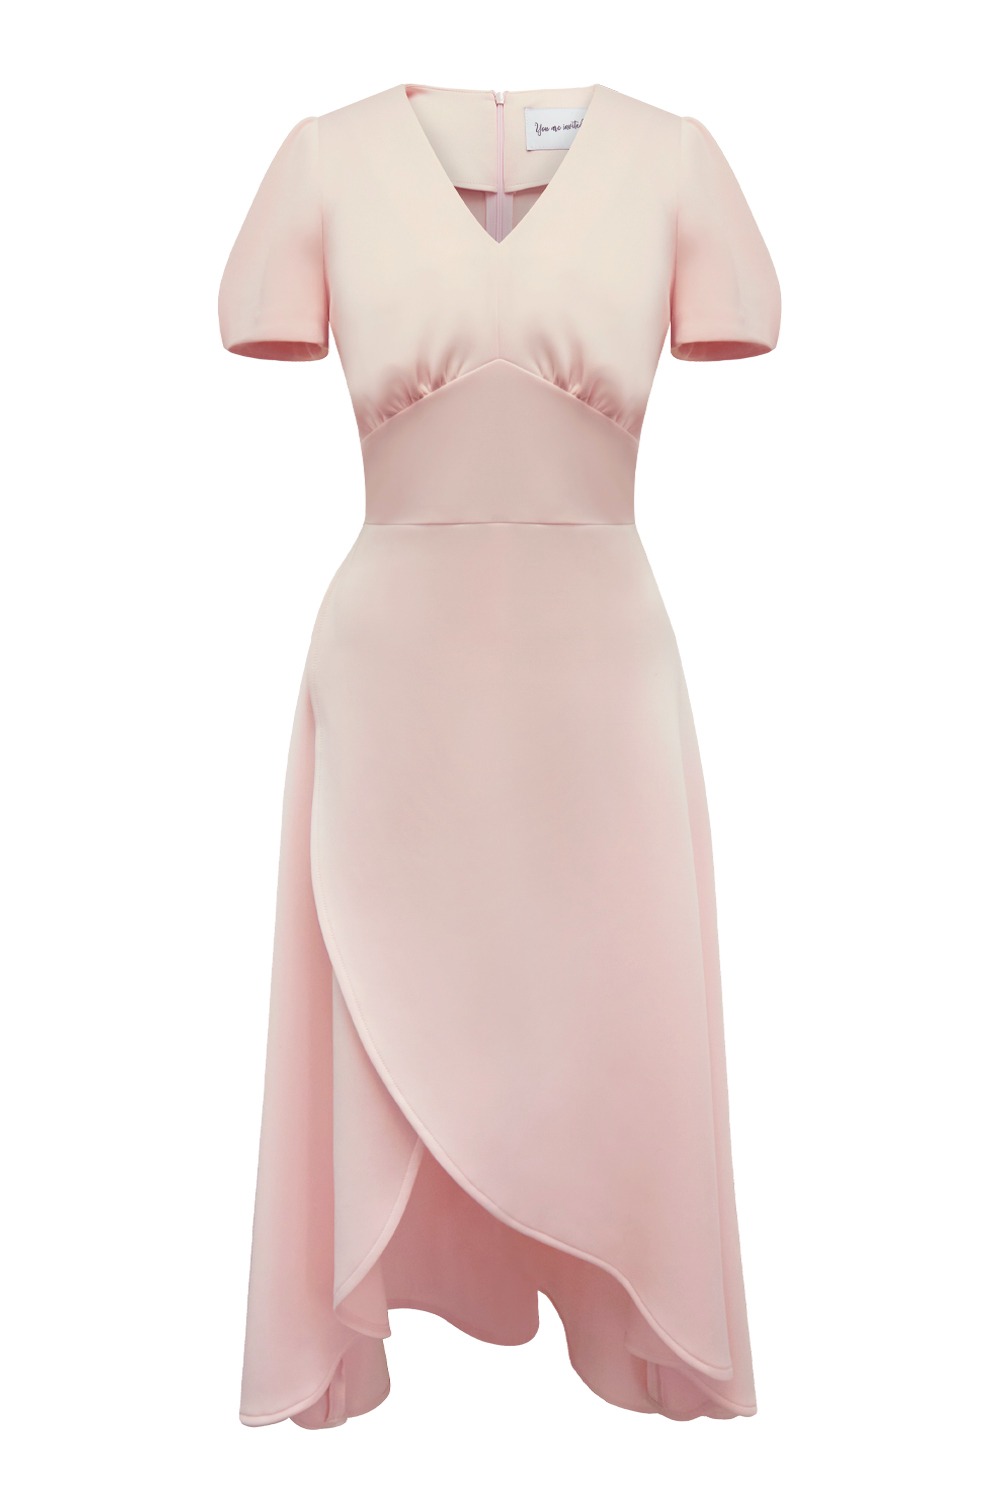 Petal v neck long dress (Cream pink)